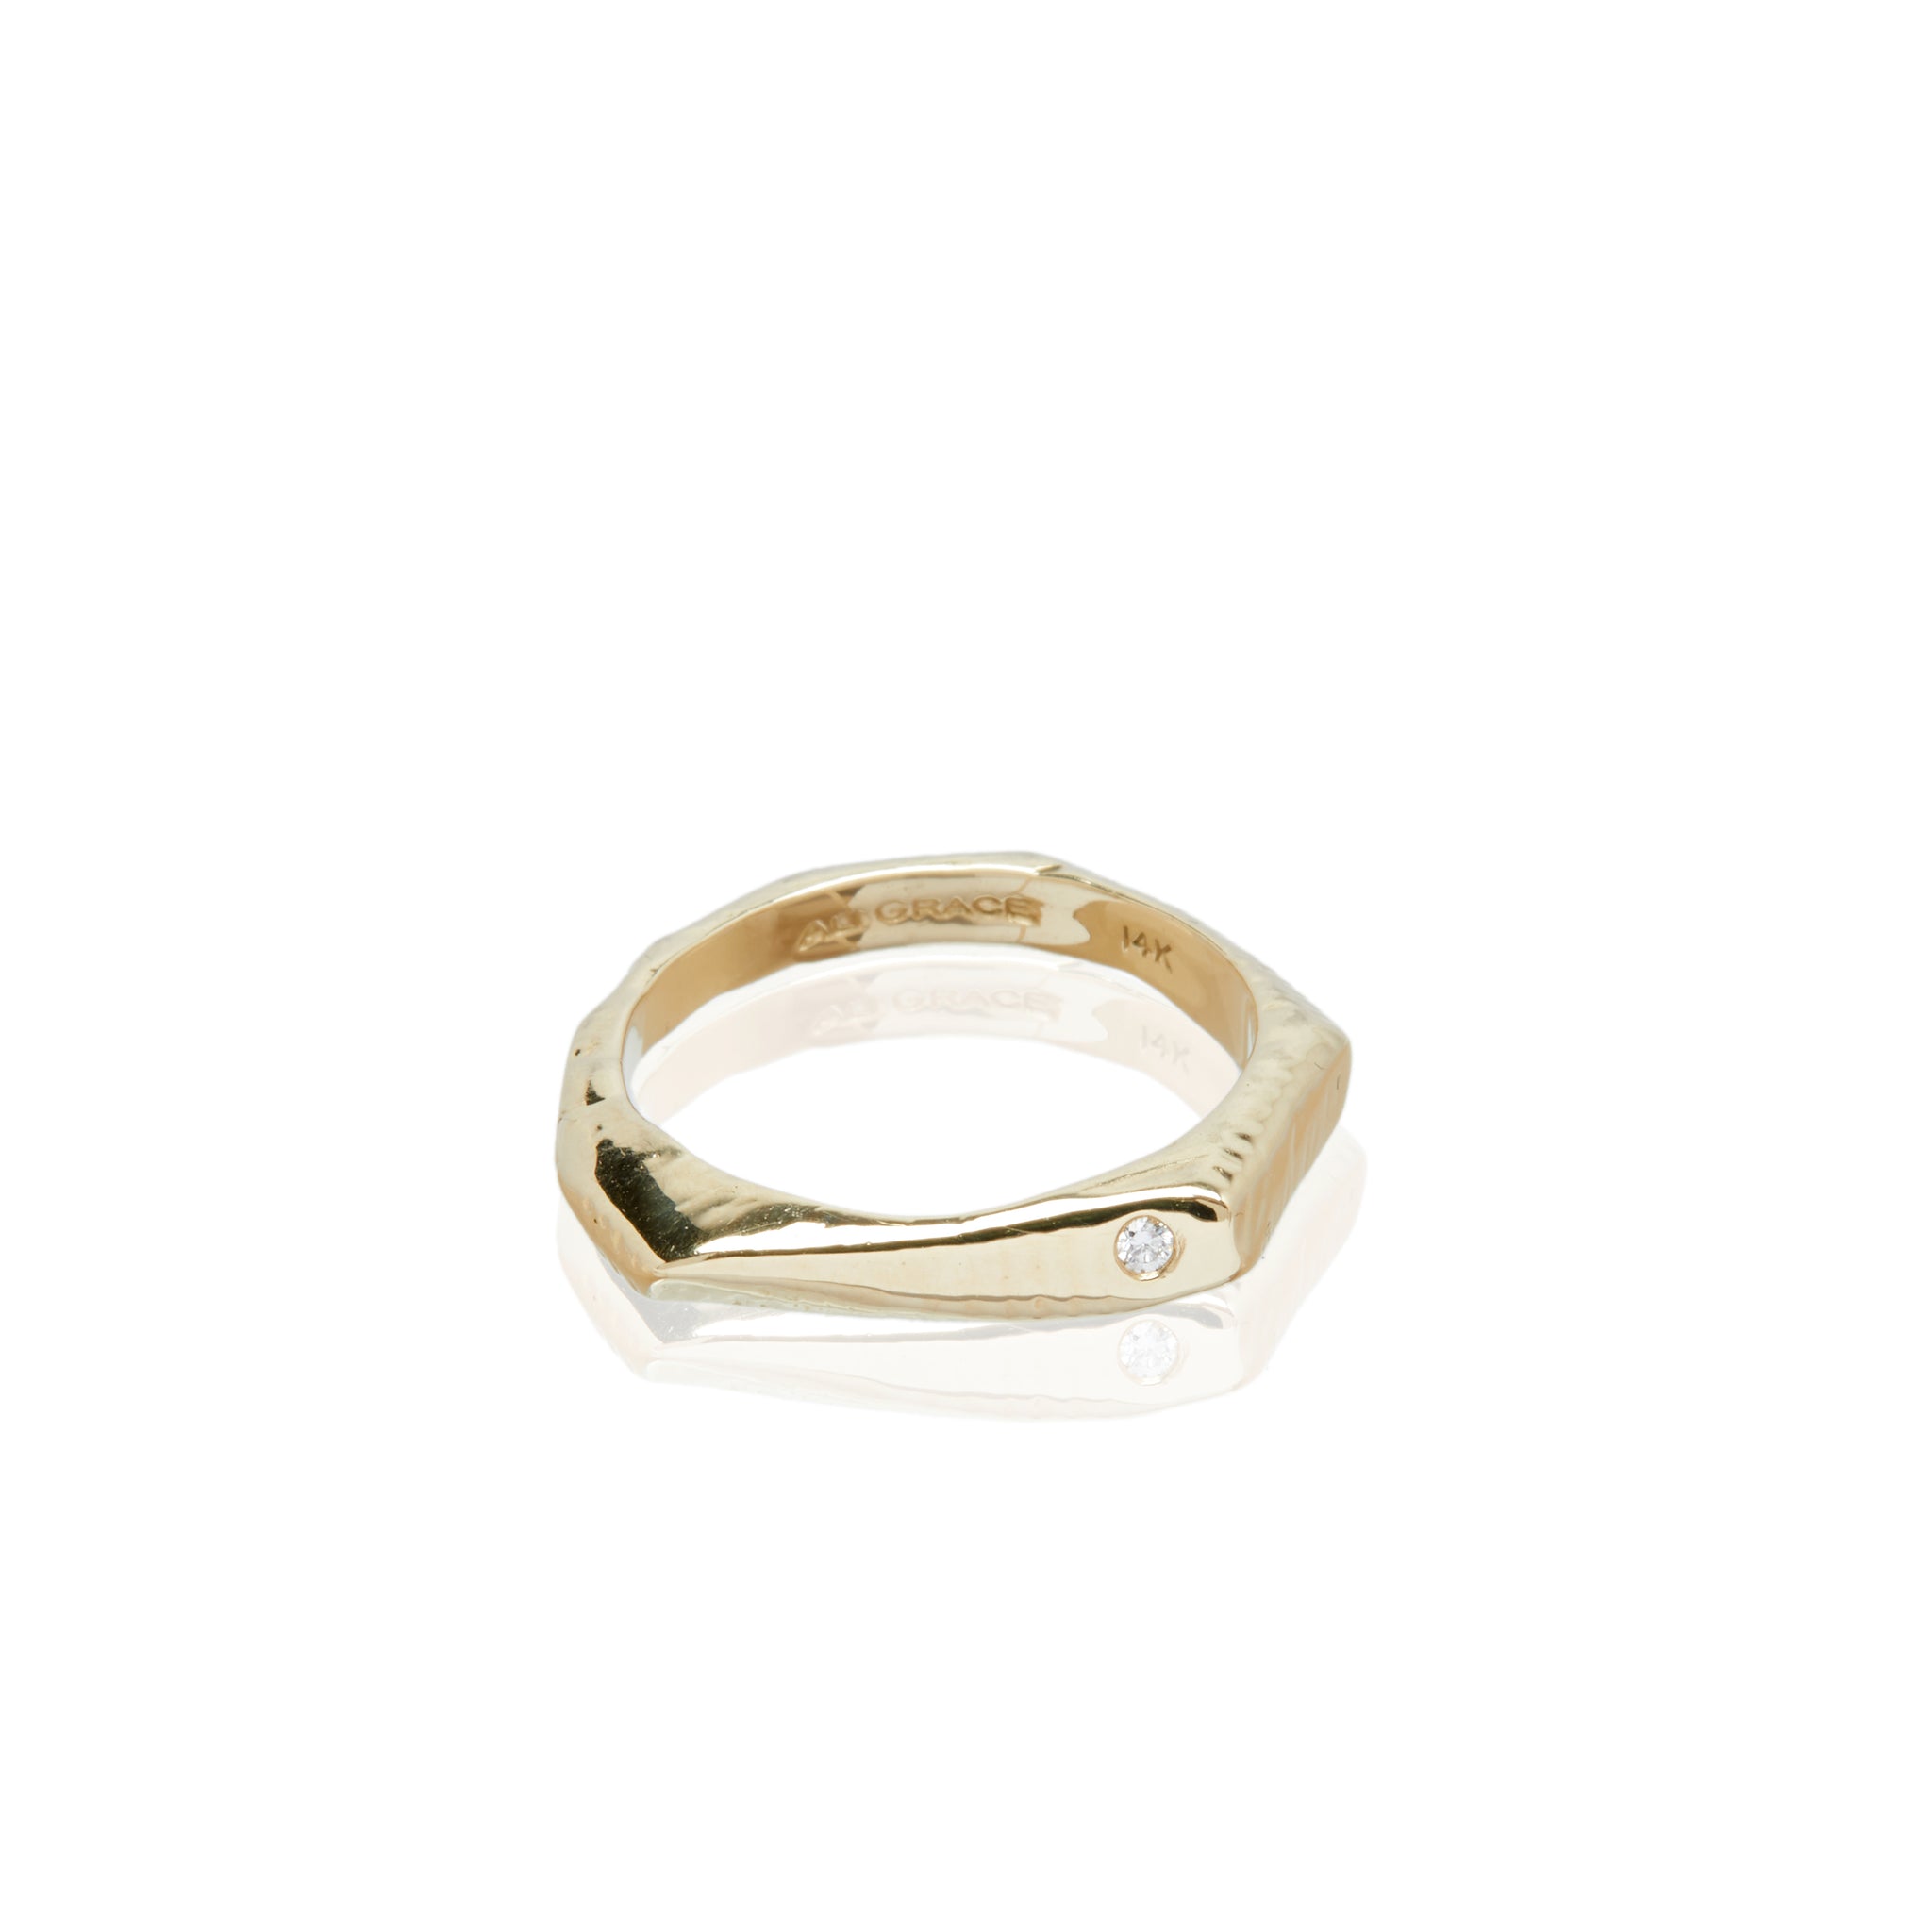 ali grace jewelry gold diamond ring alternative bride wedding jewelry ali grace jewelry